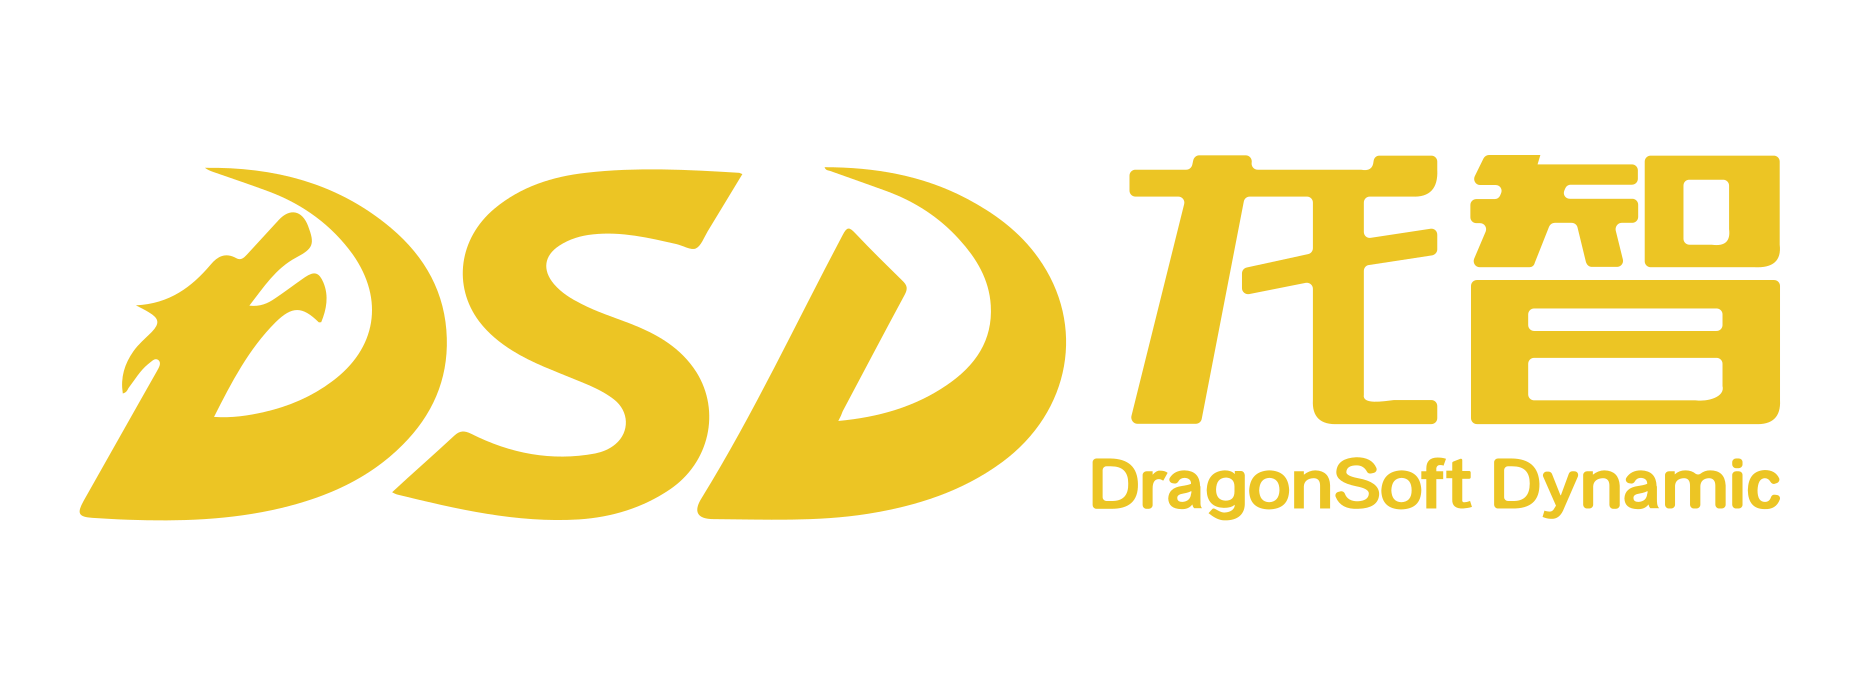 DragonSoft Digital Technology Co., Ltd.